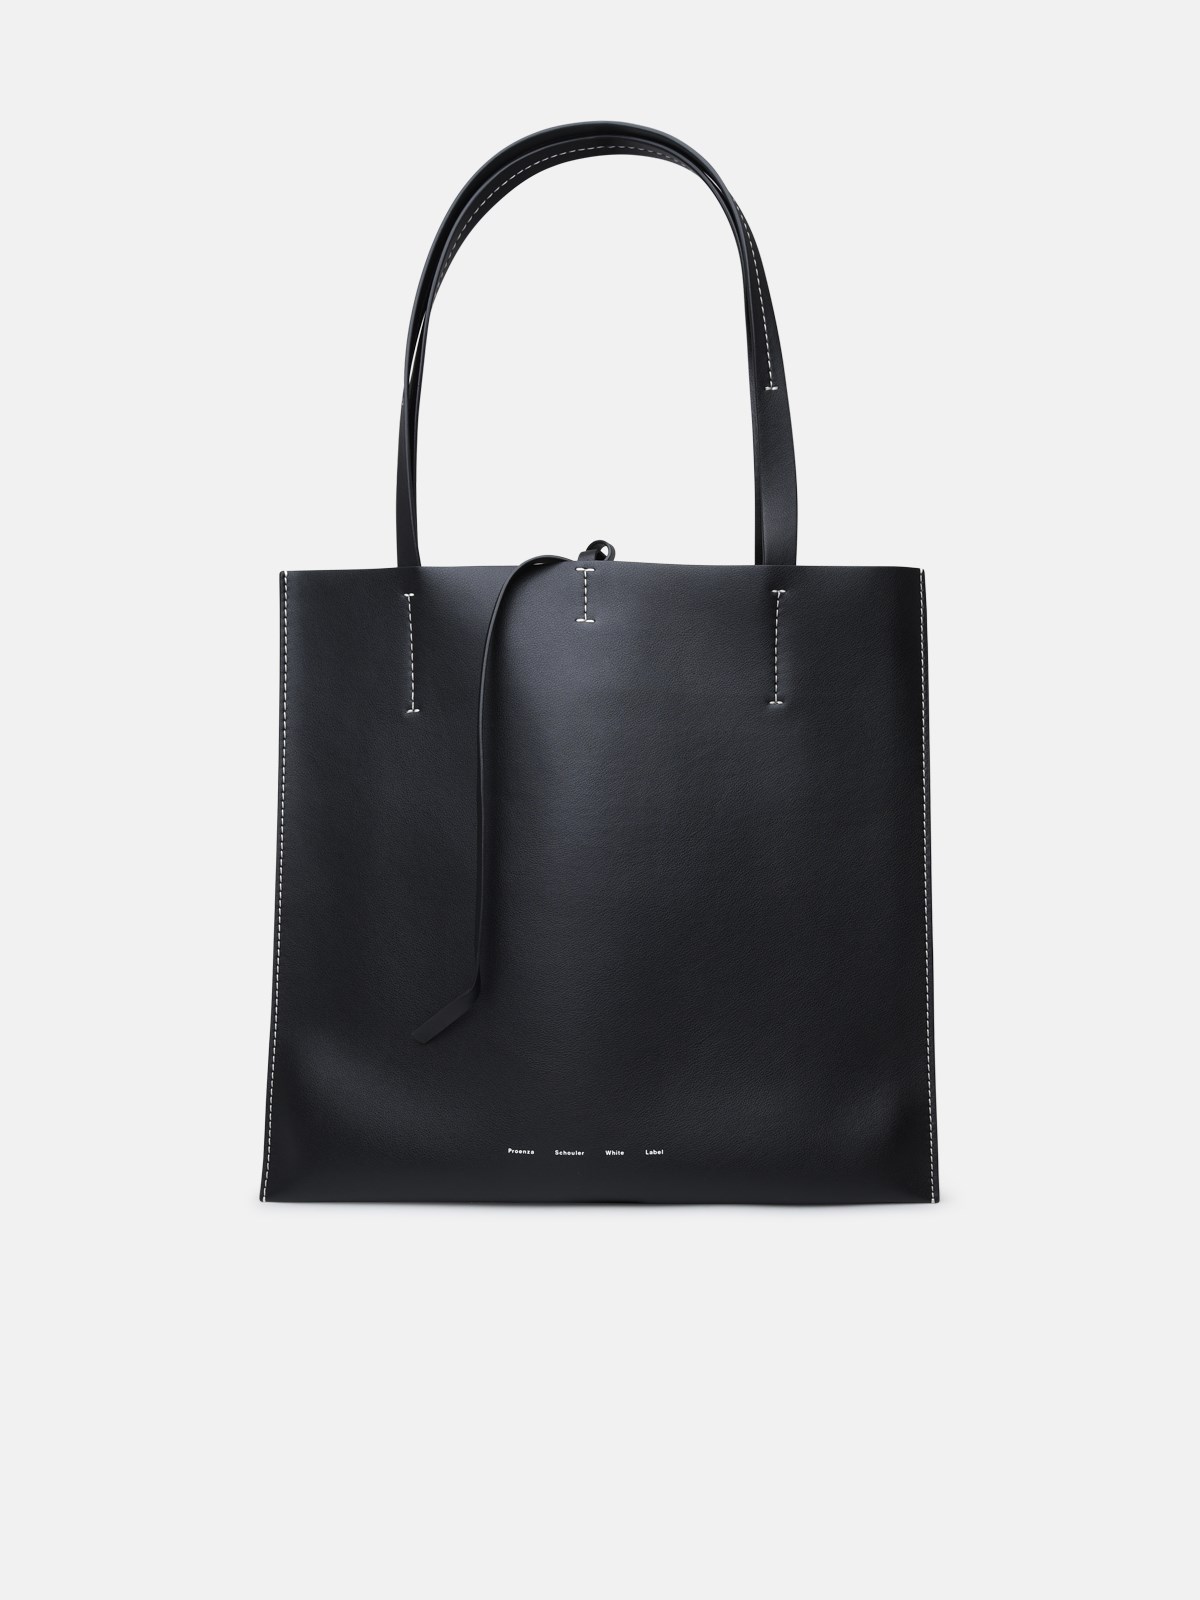 Proenza Schouler White Label Black Leather Twin Bag